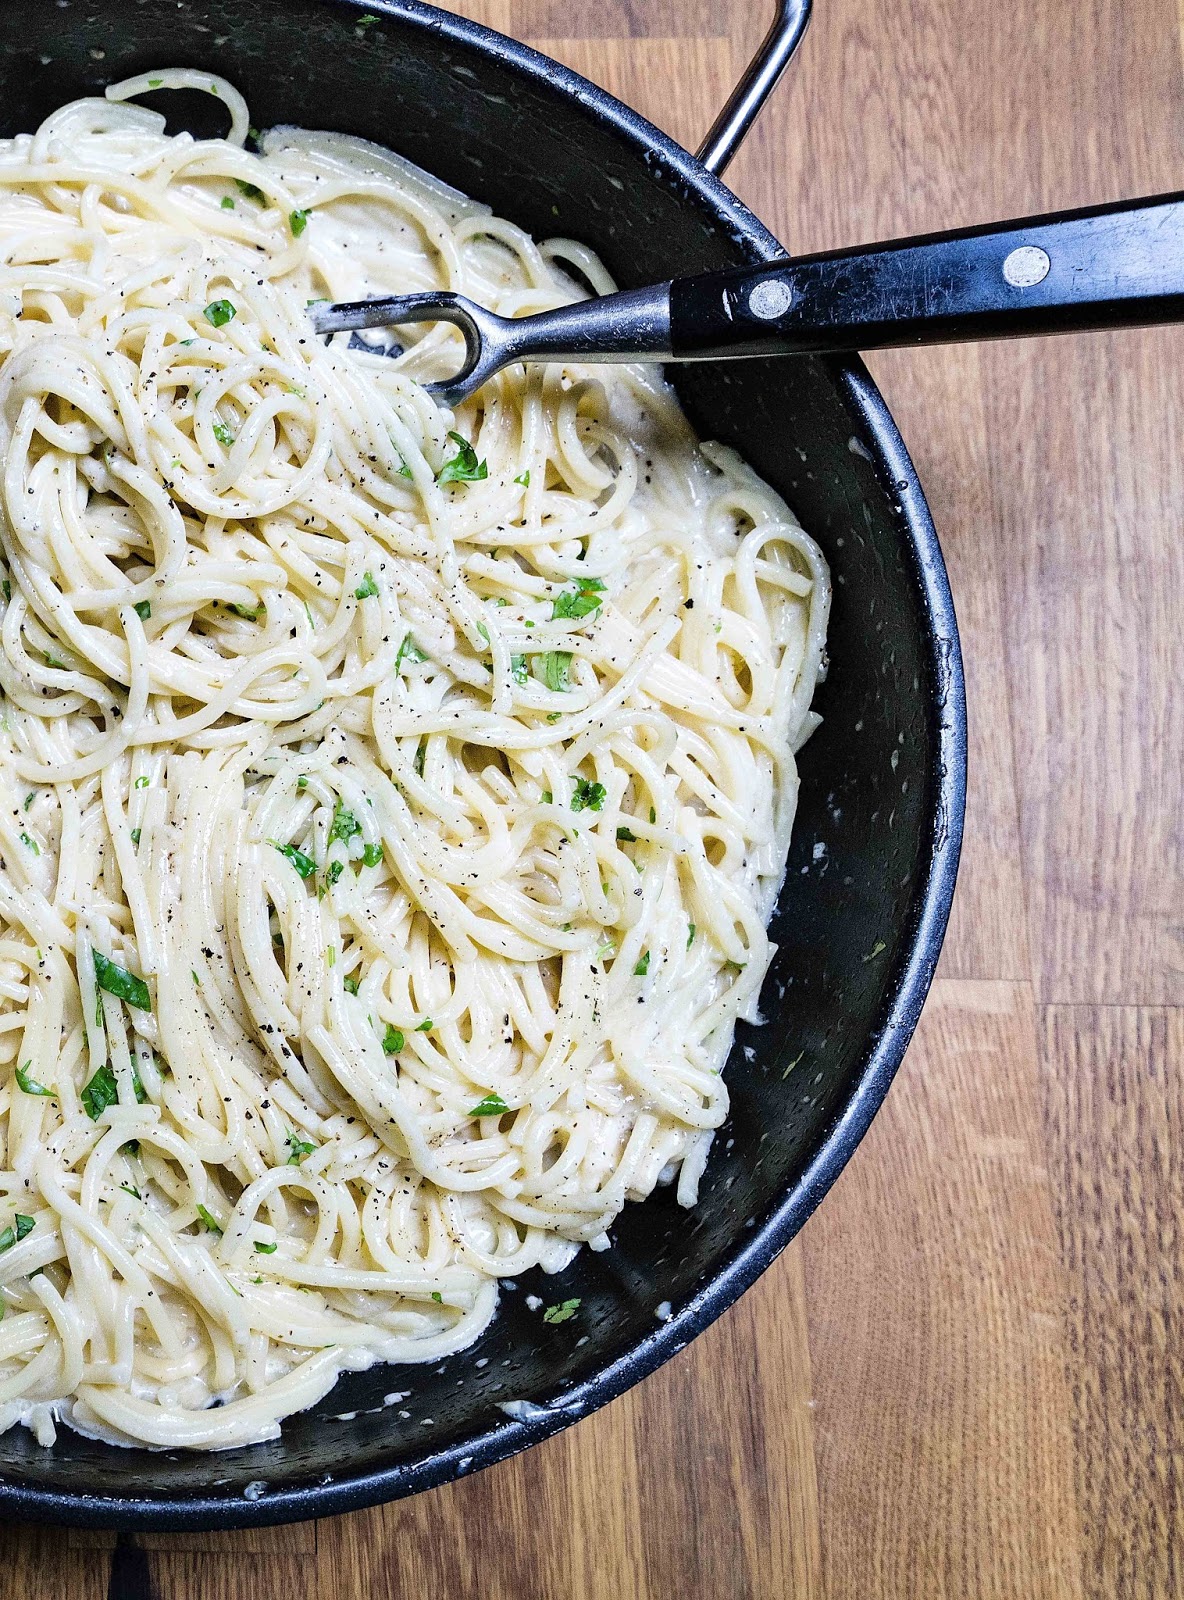 stuttgartcooking: Spaghetti mit einer Käse-Sauce